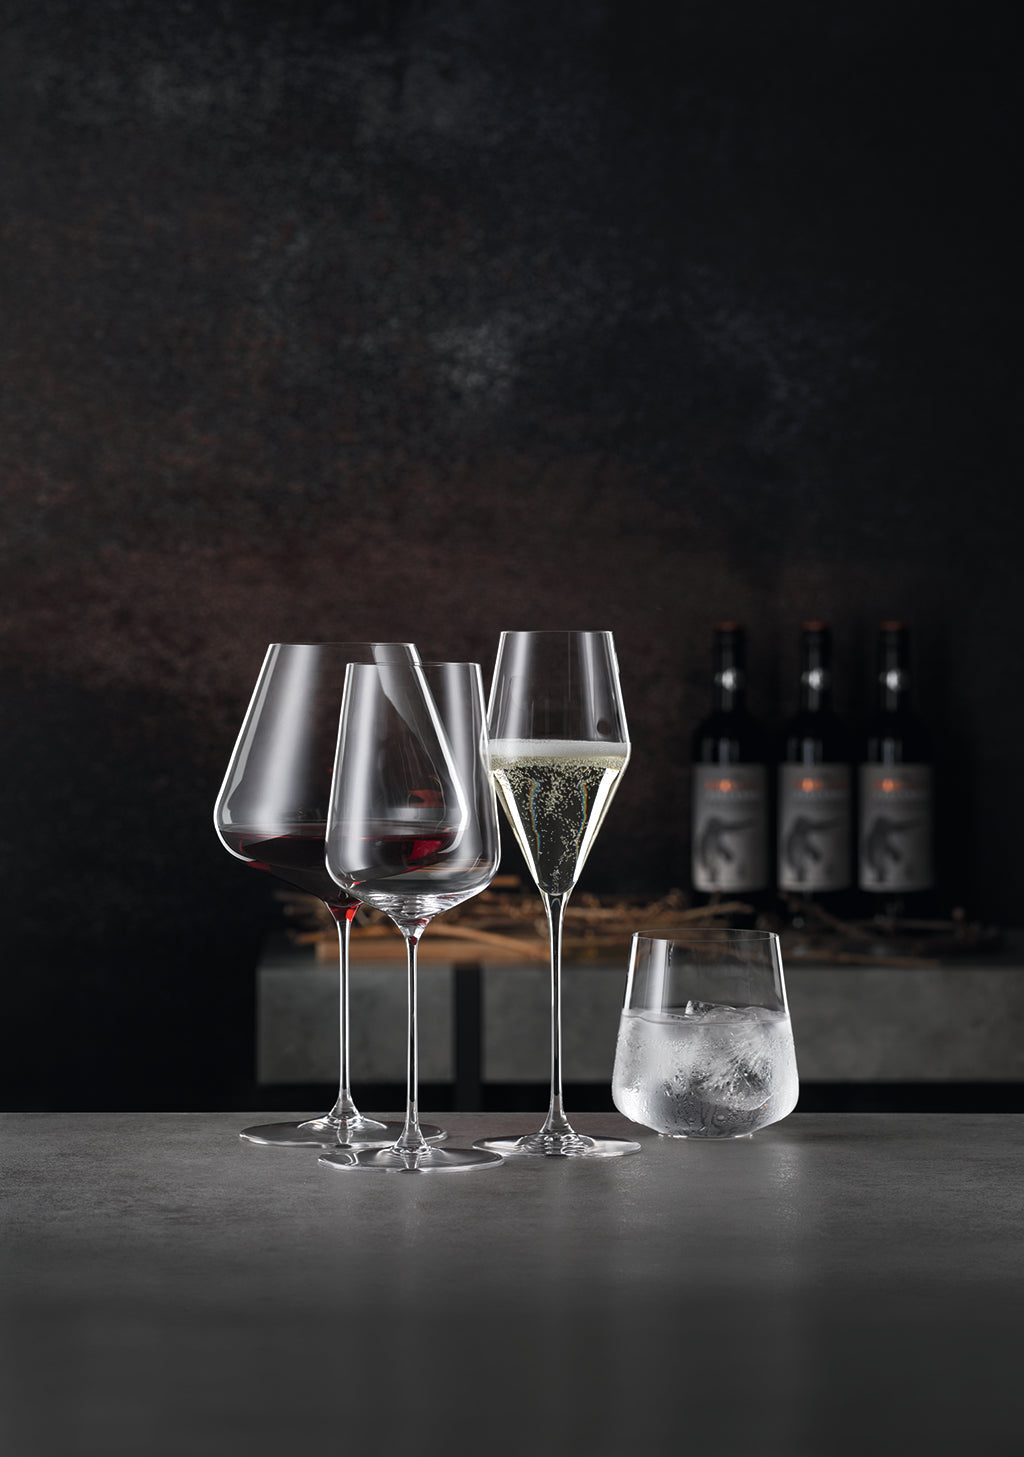 Spiegelau Definition Burgundy Glass Set of 2